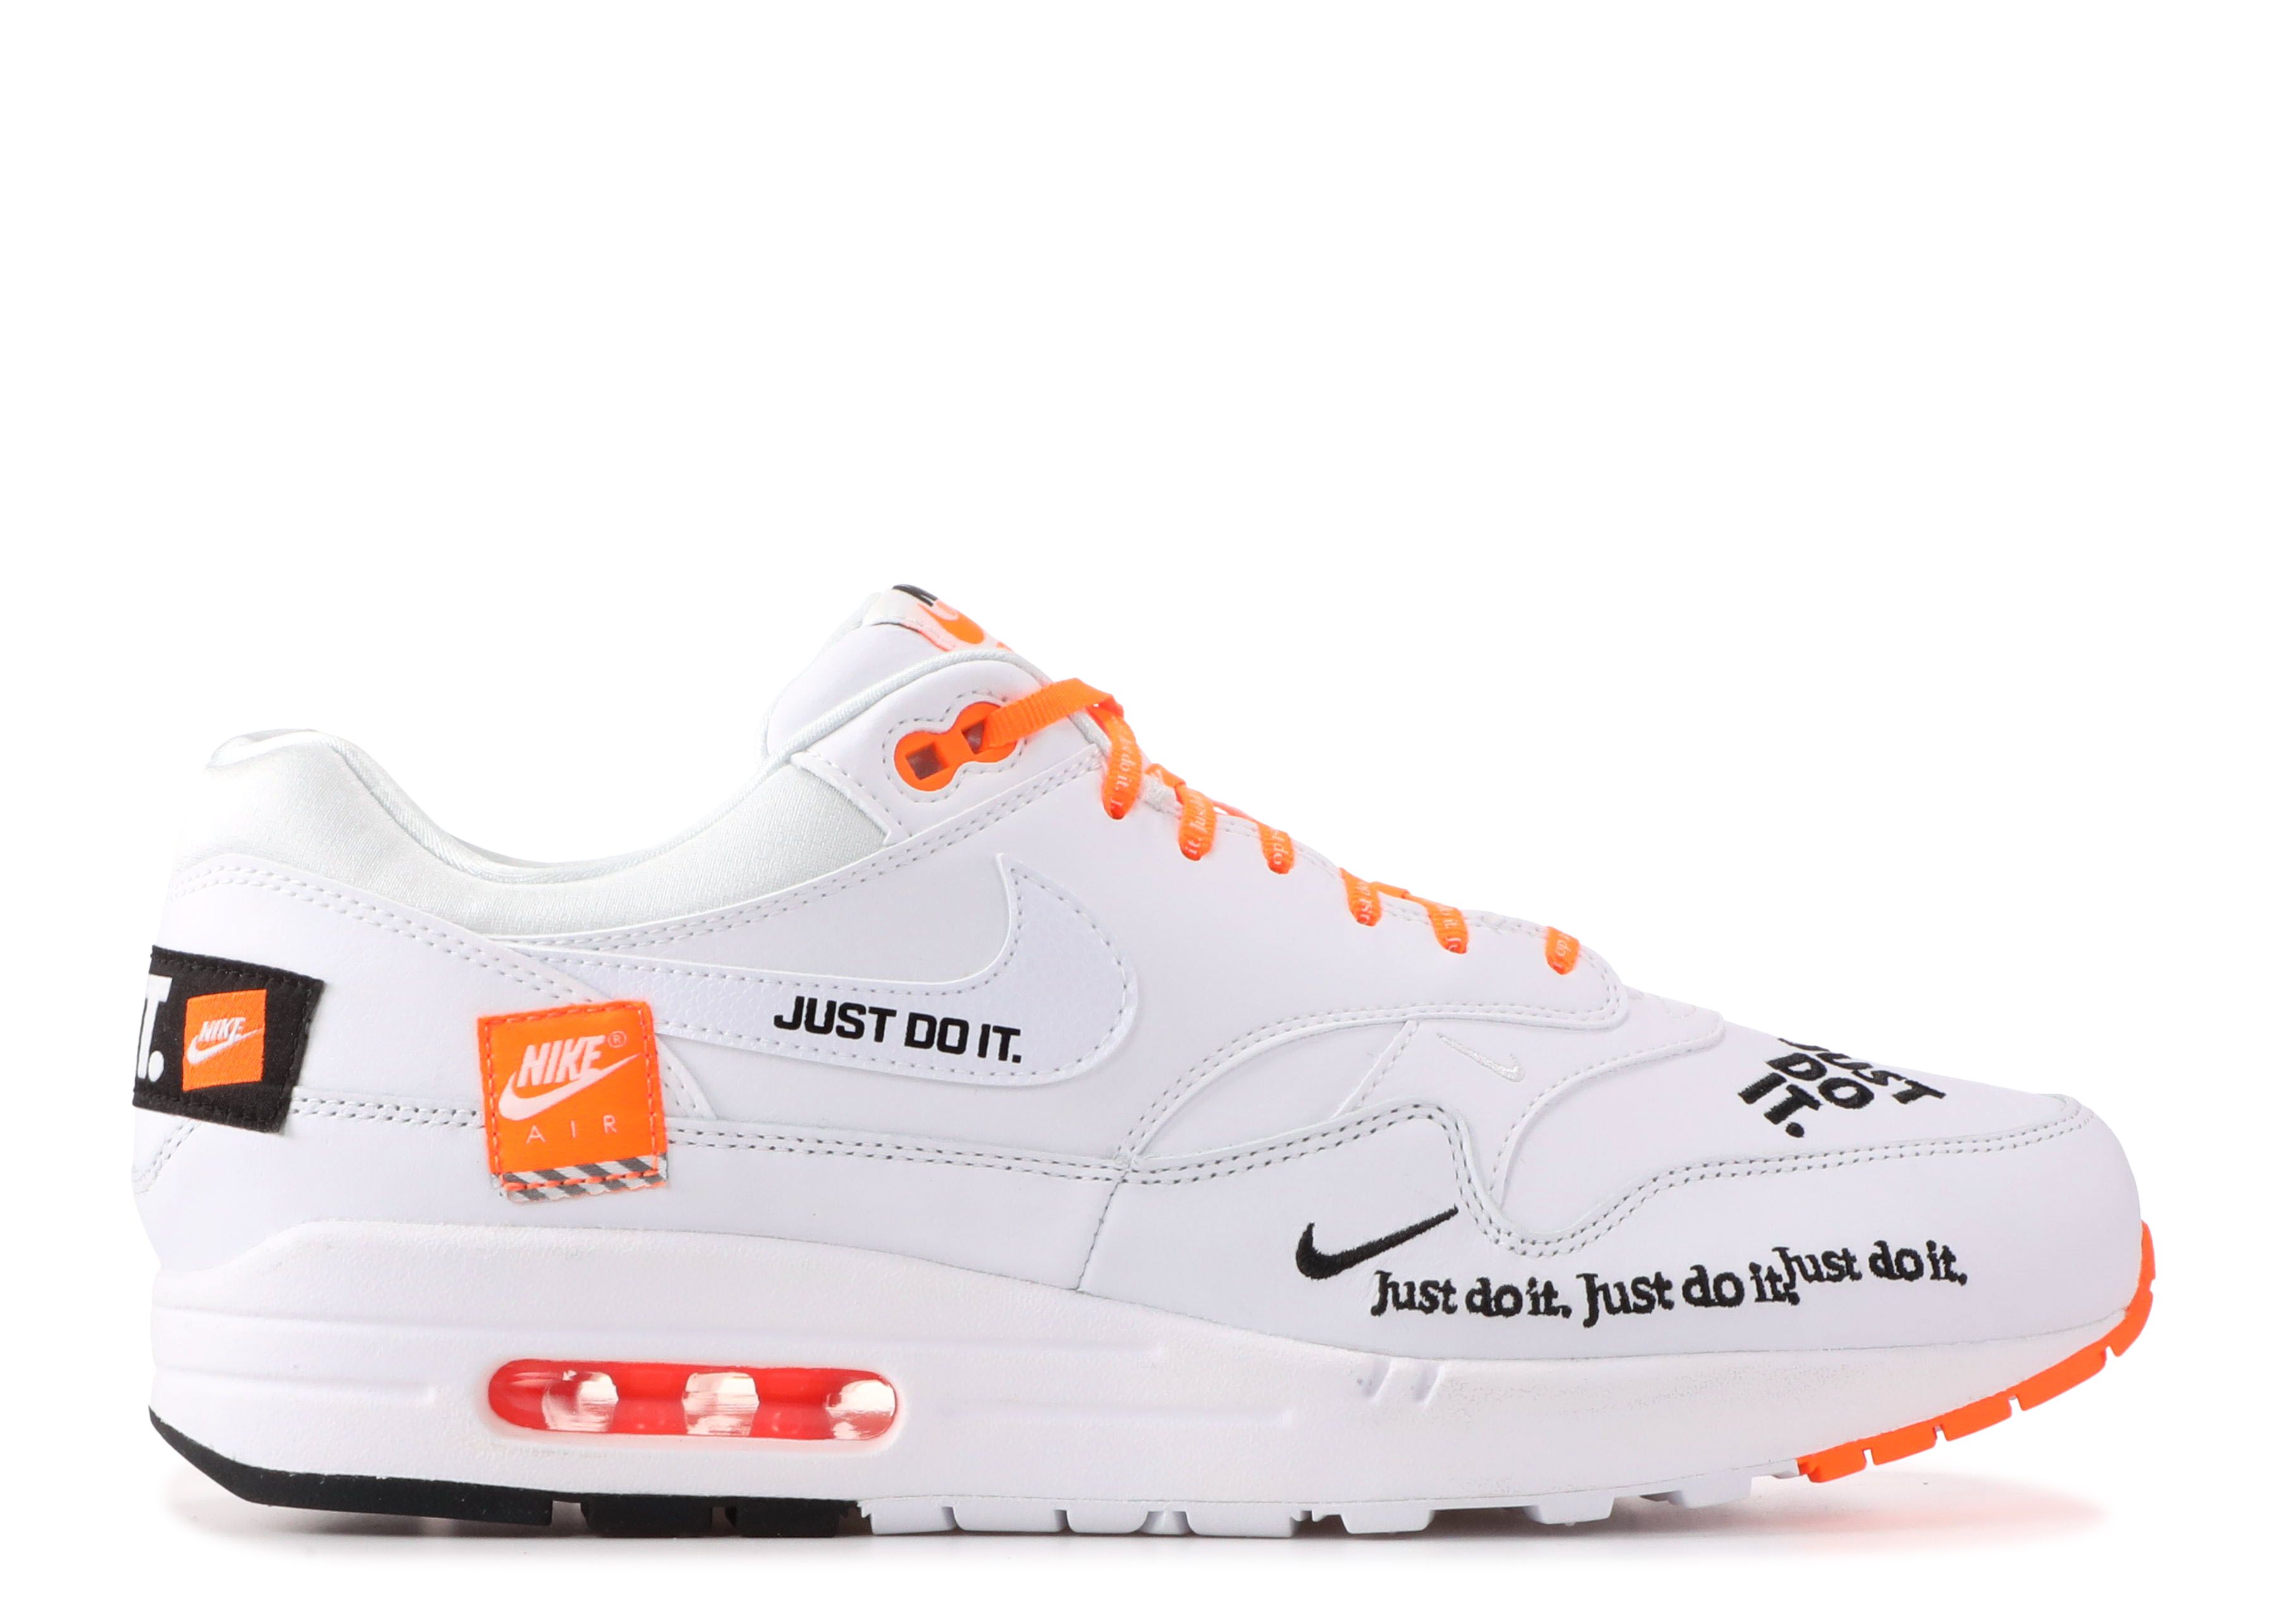 Air Max 1 'Just It' - Nike AO1021 100 white/orange/black | Flight Club